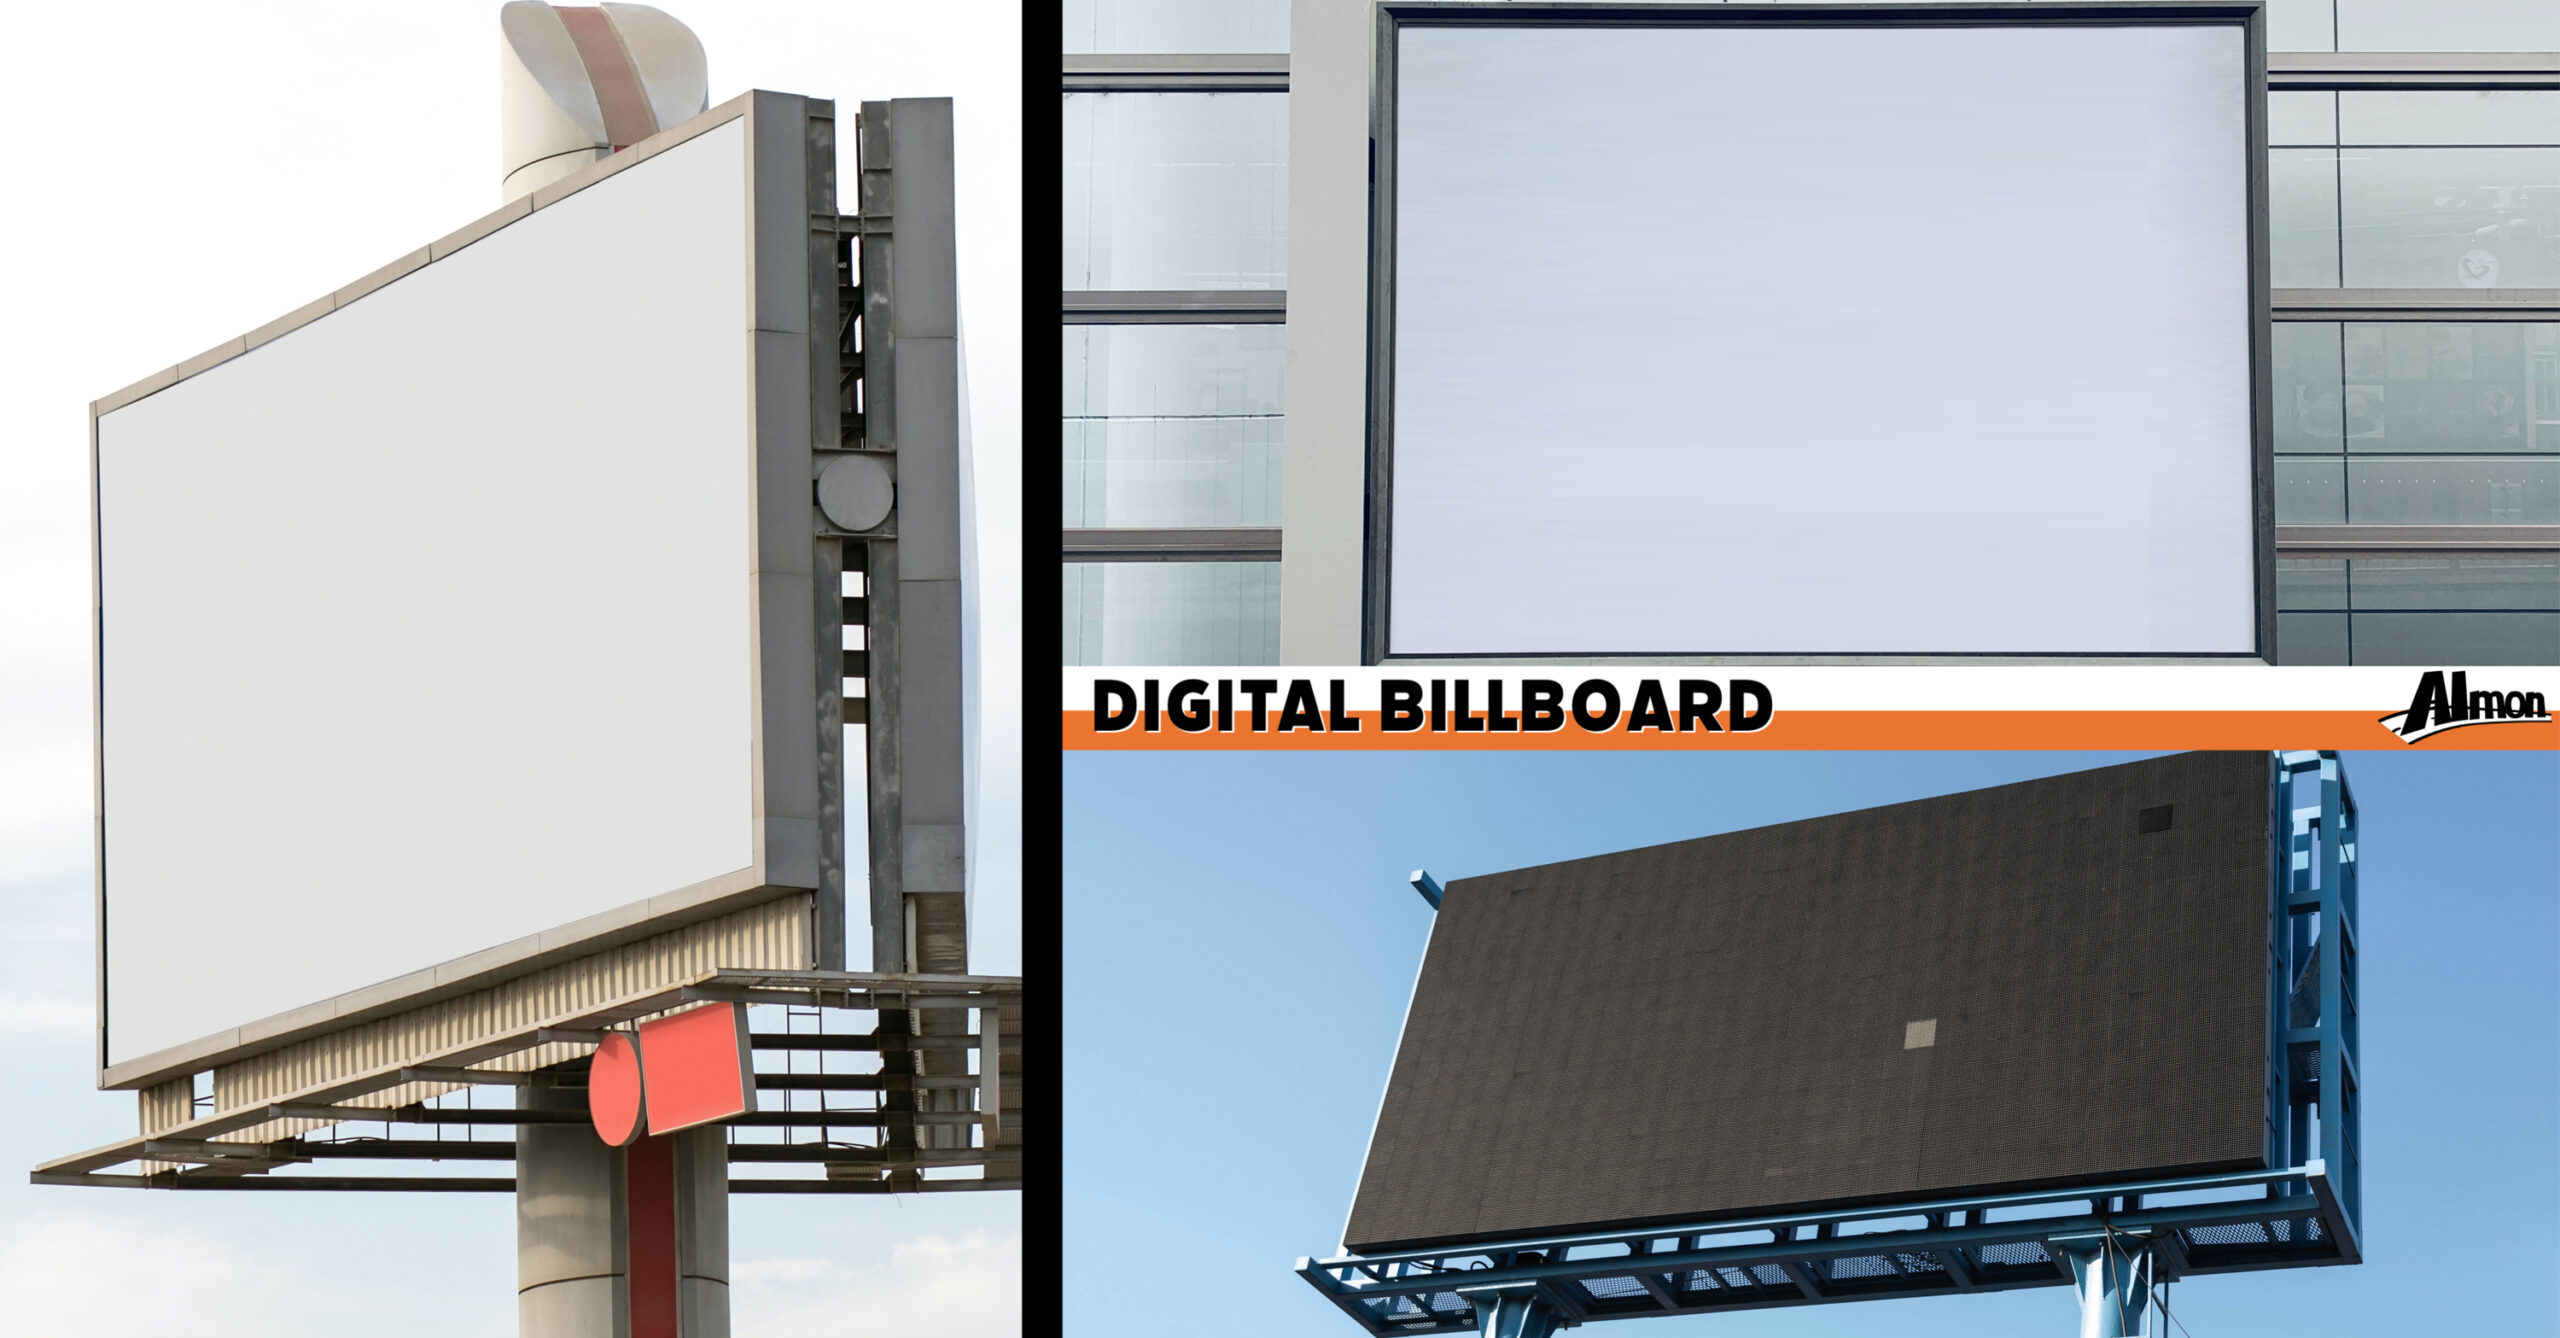 Almon Digital Billboard